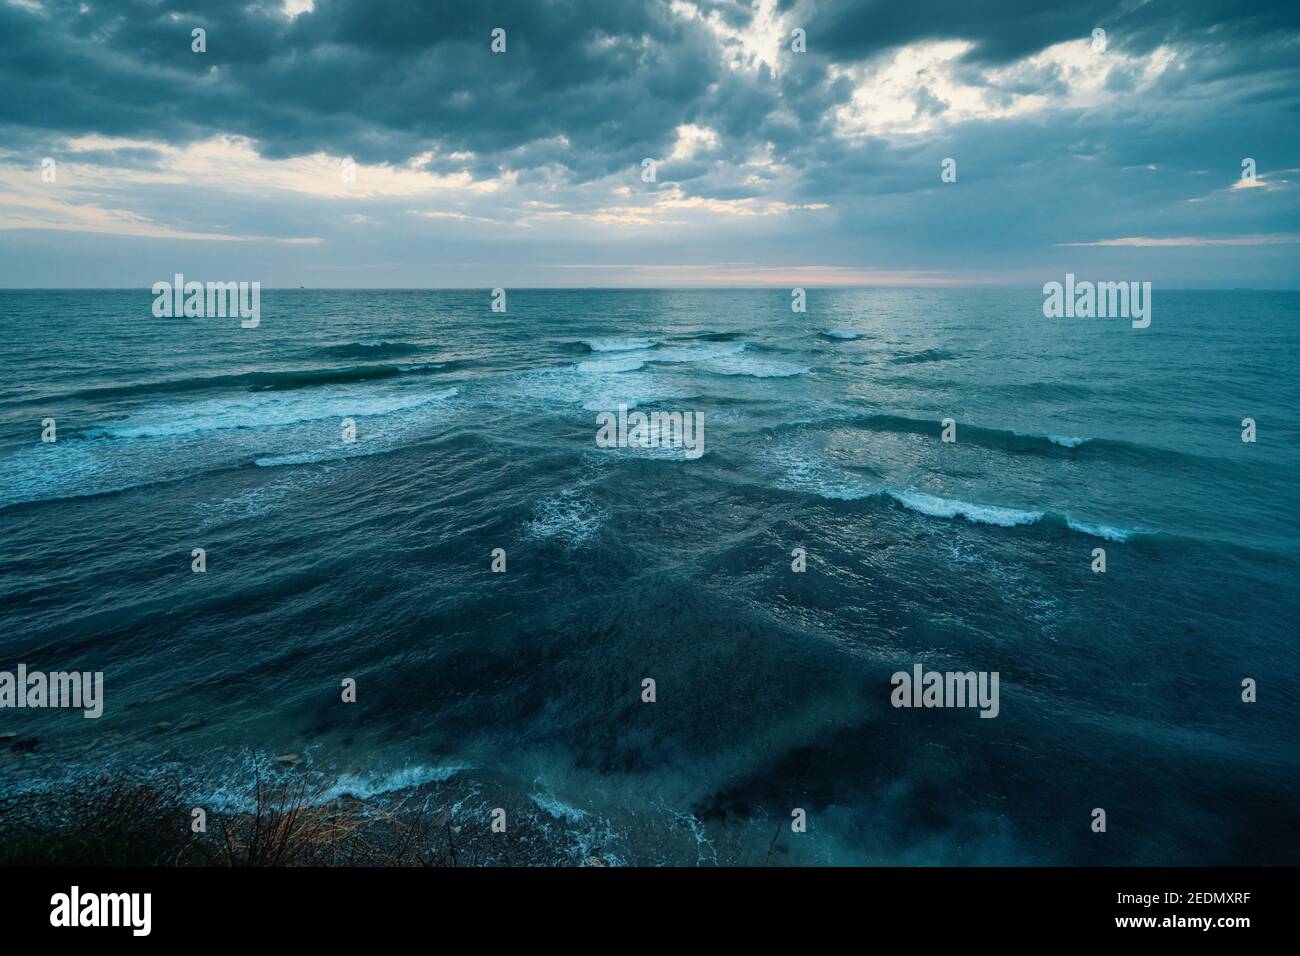 Sea or Ocean Dramatic Seascape Panorama in dark blue moody colors. Stock Photo